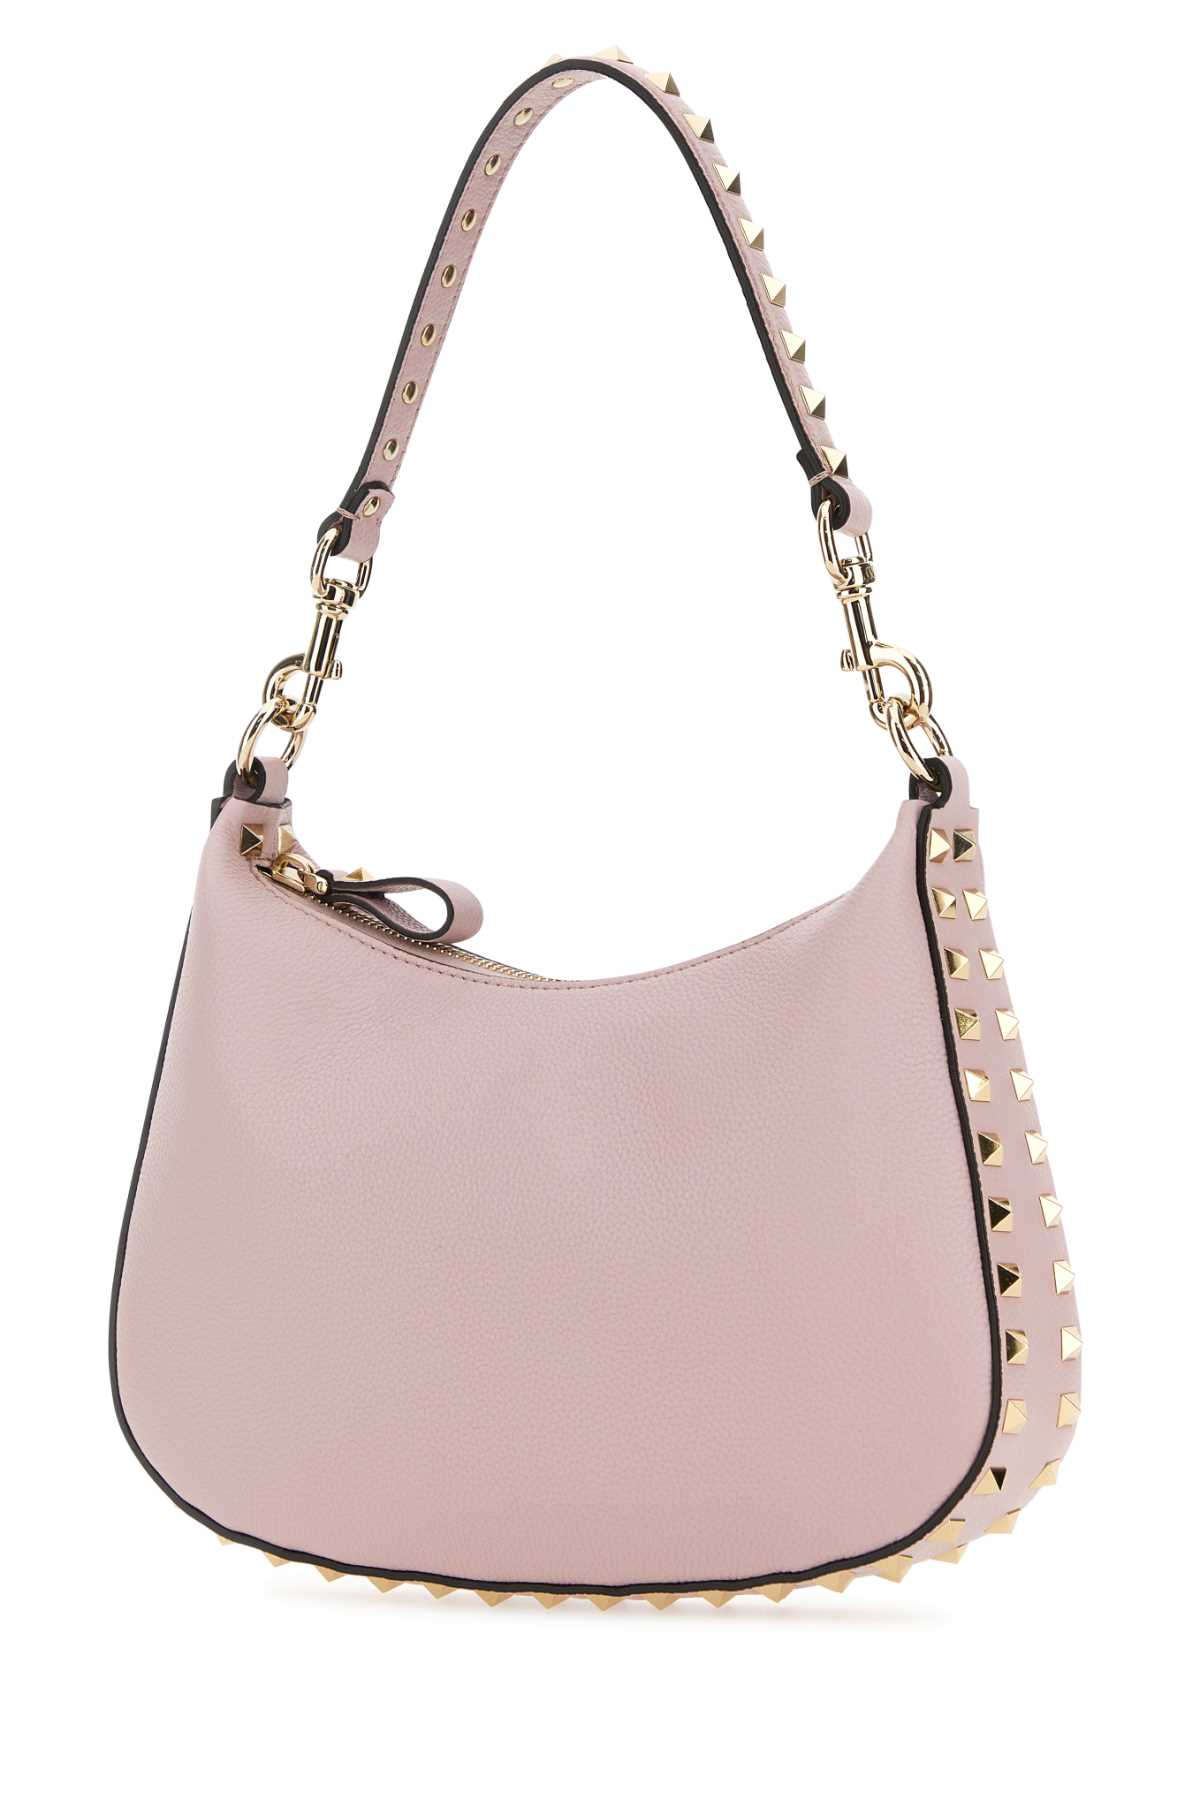 Valentino Garavani Lilac Leather Small Hobo Rockstud Shoulder Bag In Pink